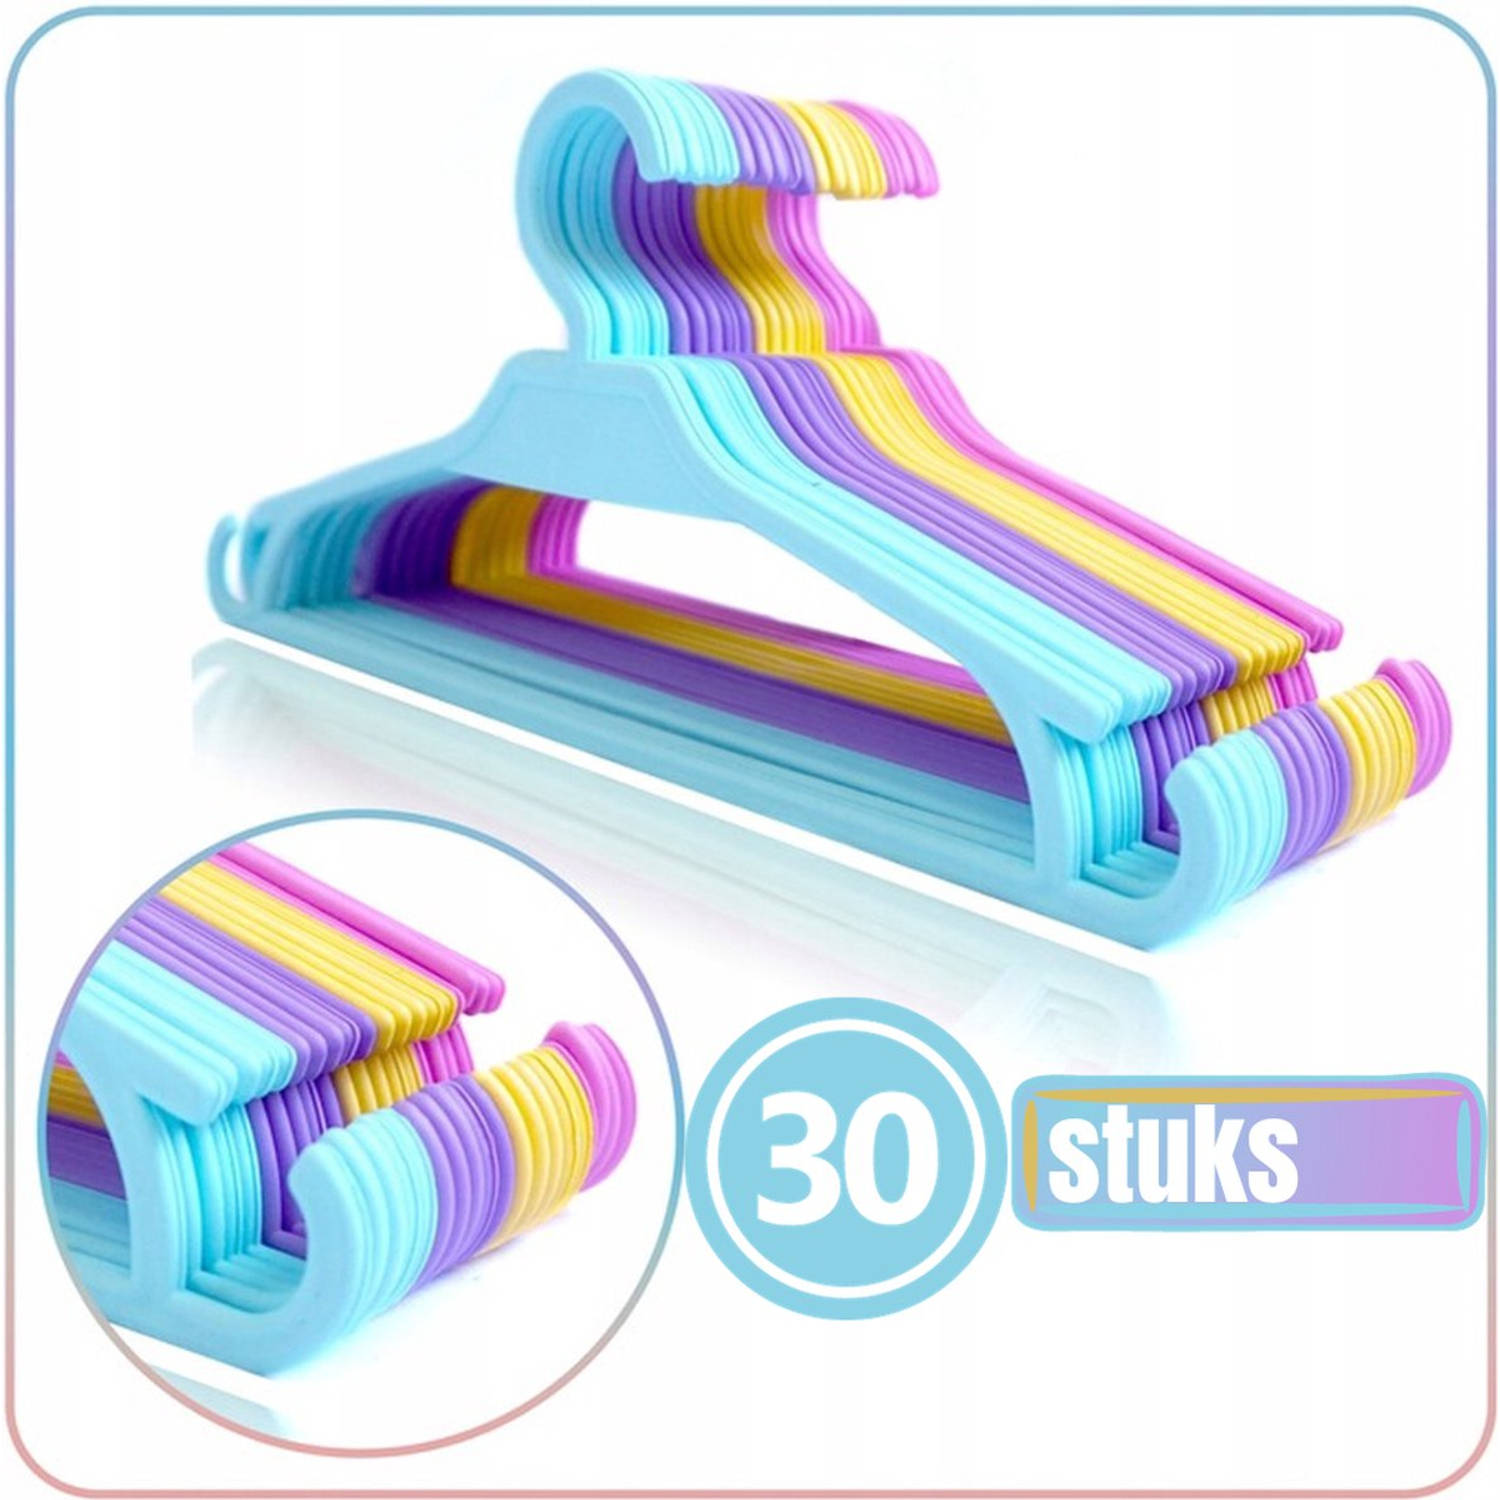 Synx Tools kledinghangers kinderen - Set 30 stuks - Mix kleuren - Kinderkleding - Babykleding - Kleerhangers - Kinderen